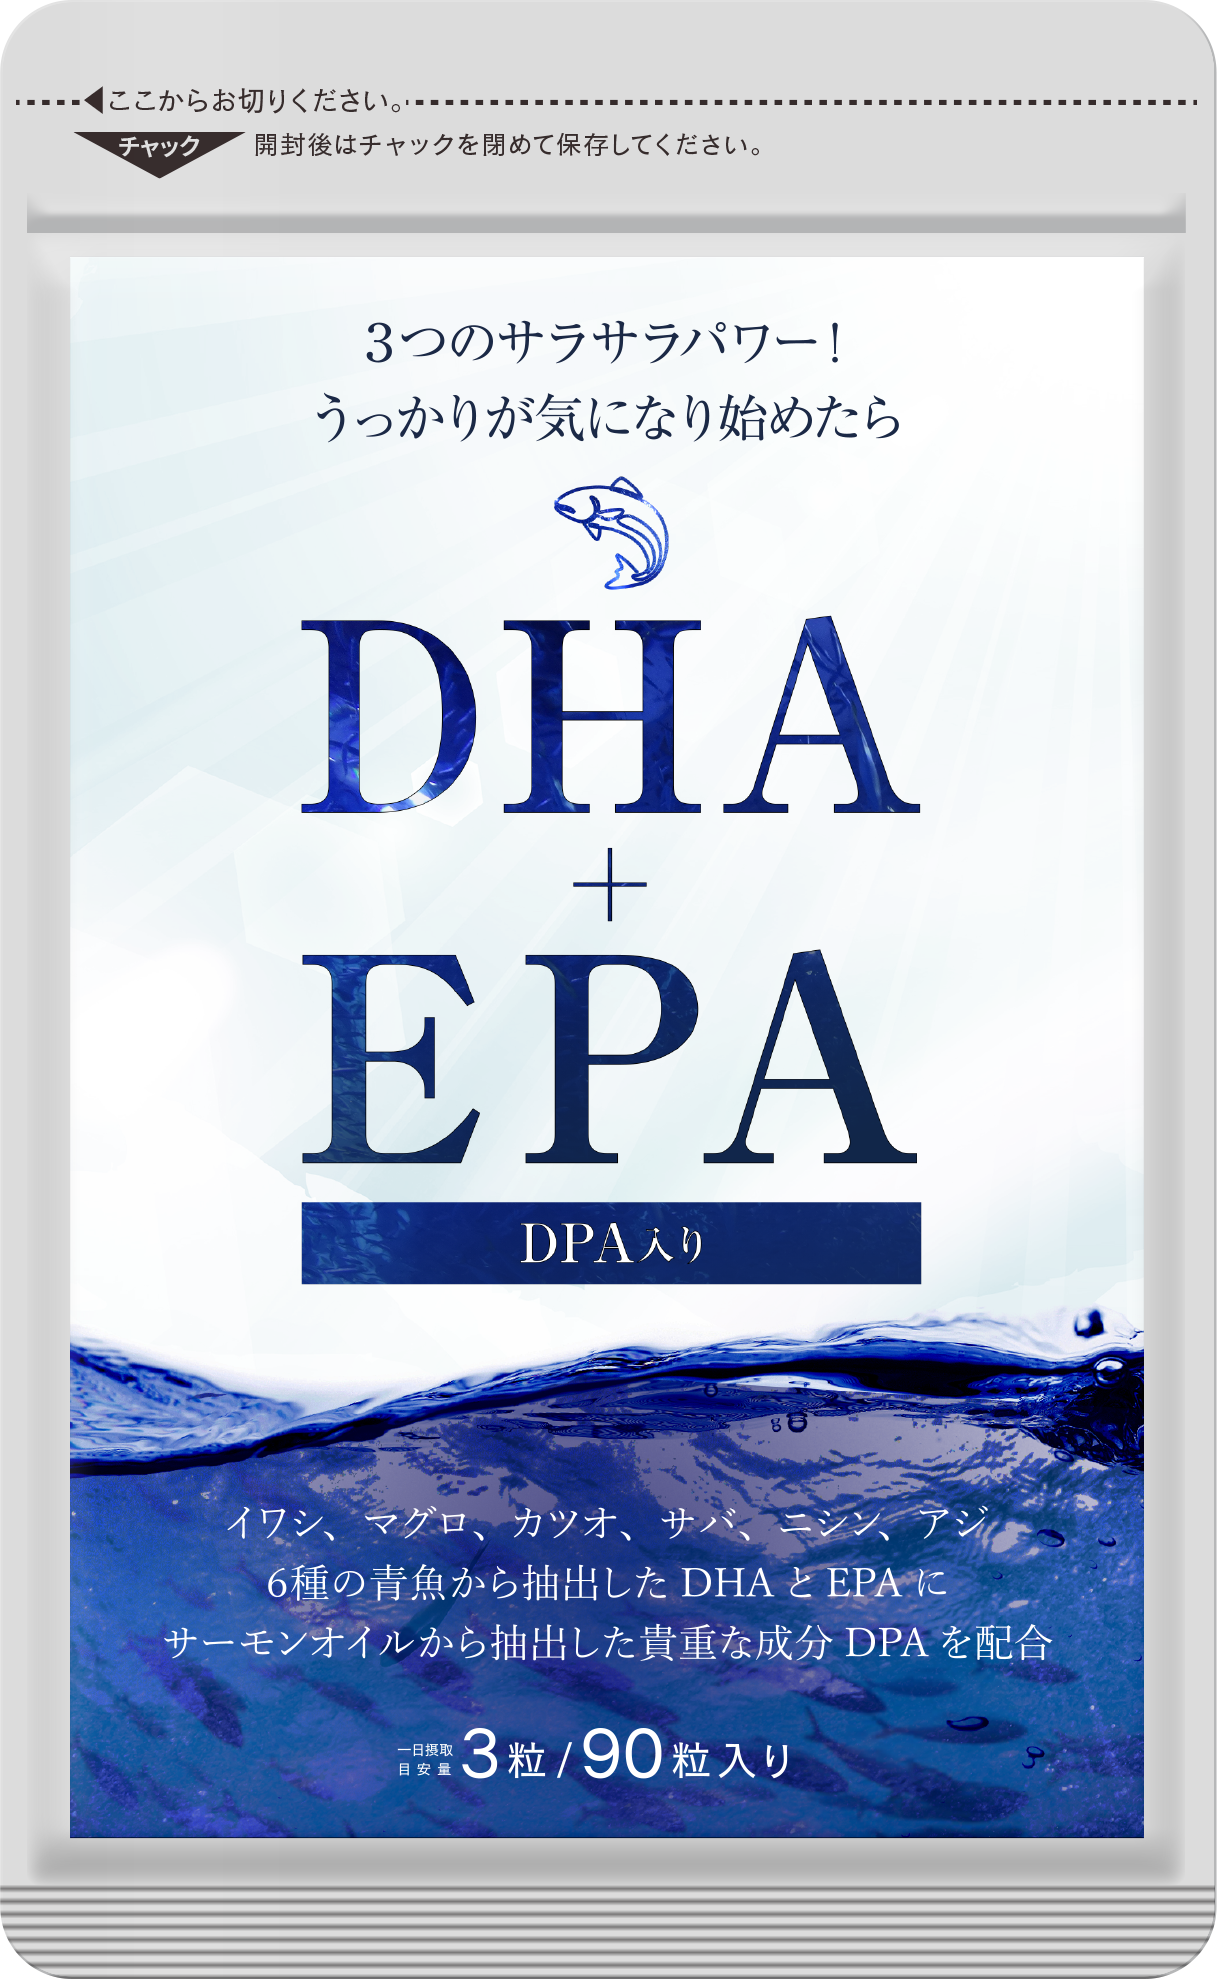 SALE開催中 真空低温抽出法で マグロ由来のDHA EPA DPA マグロ由来ビタミンを抽出